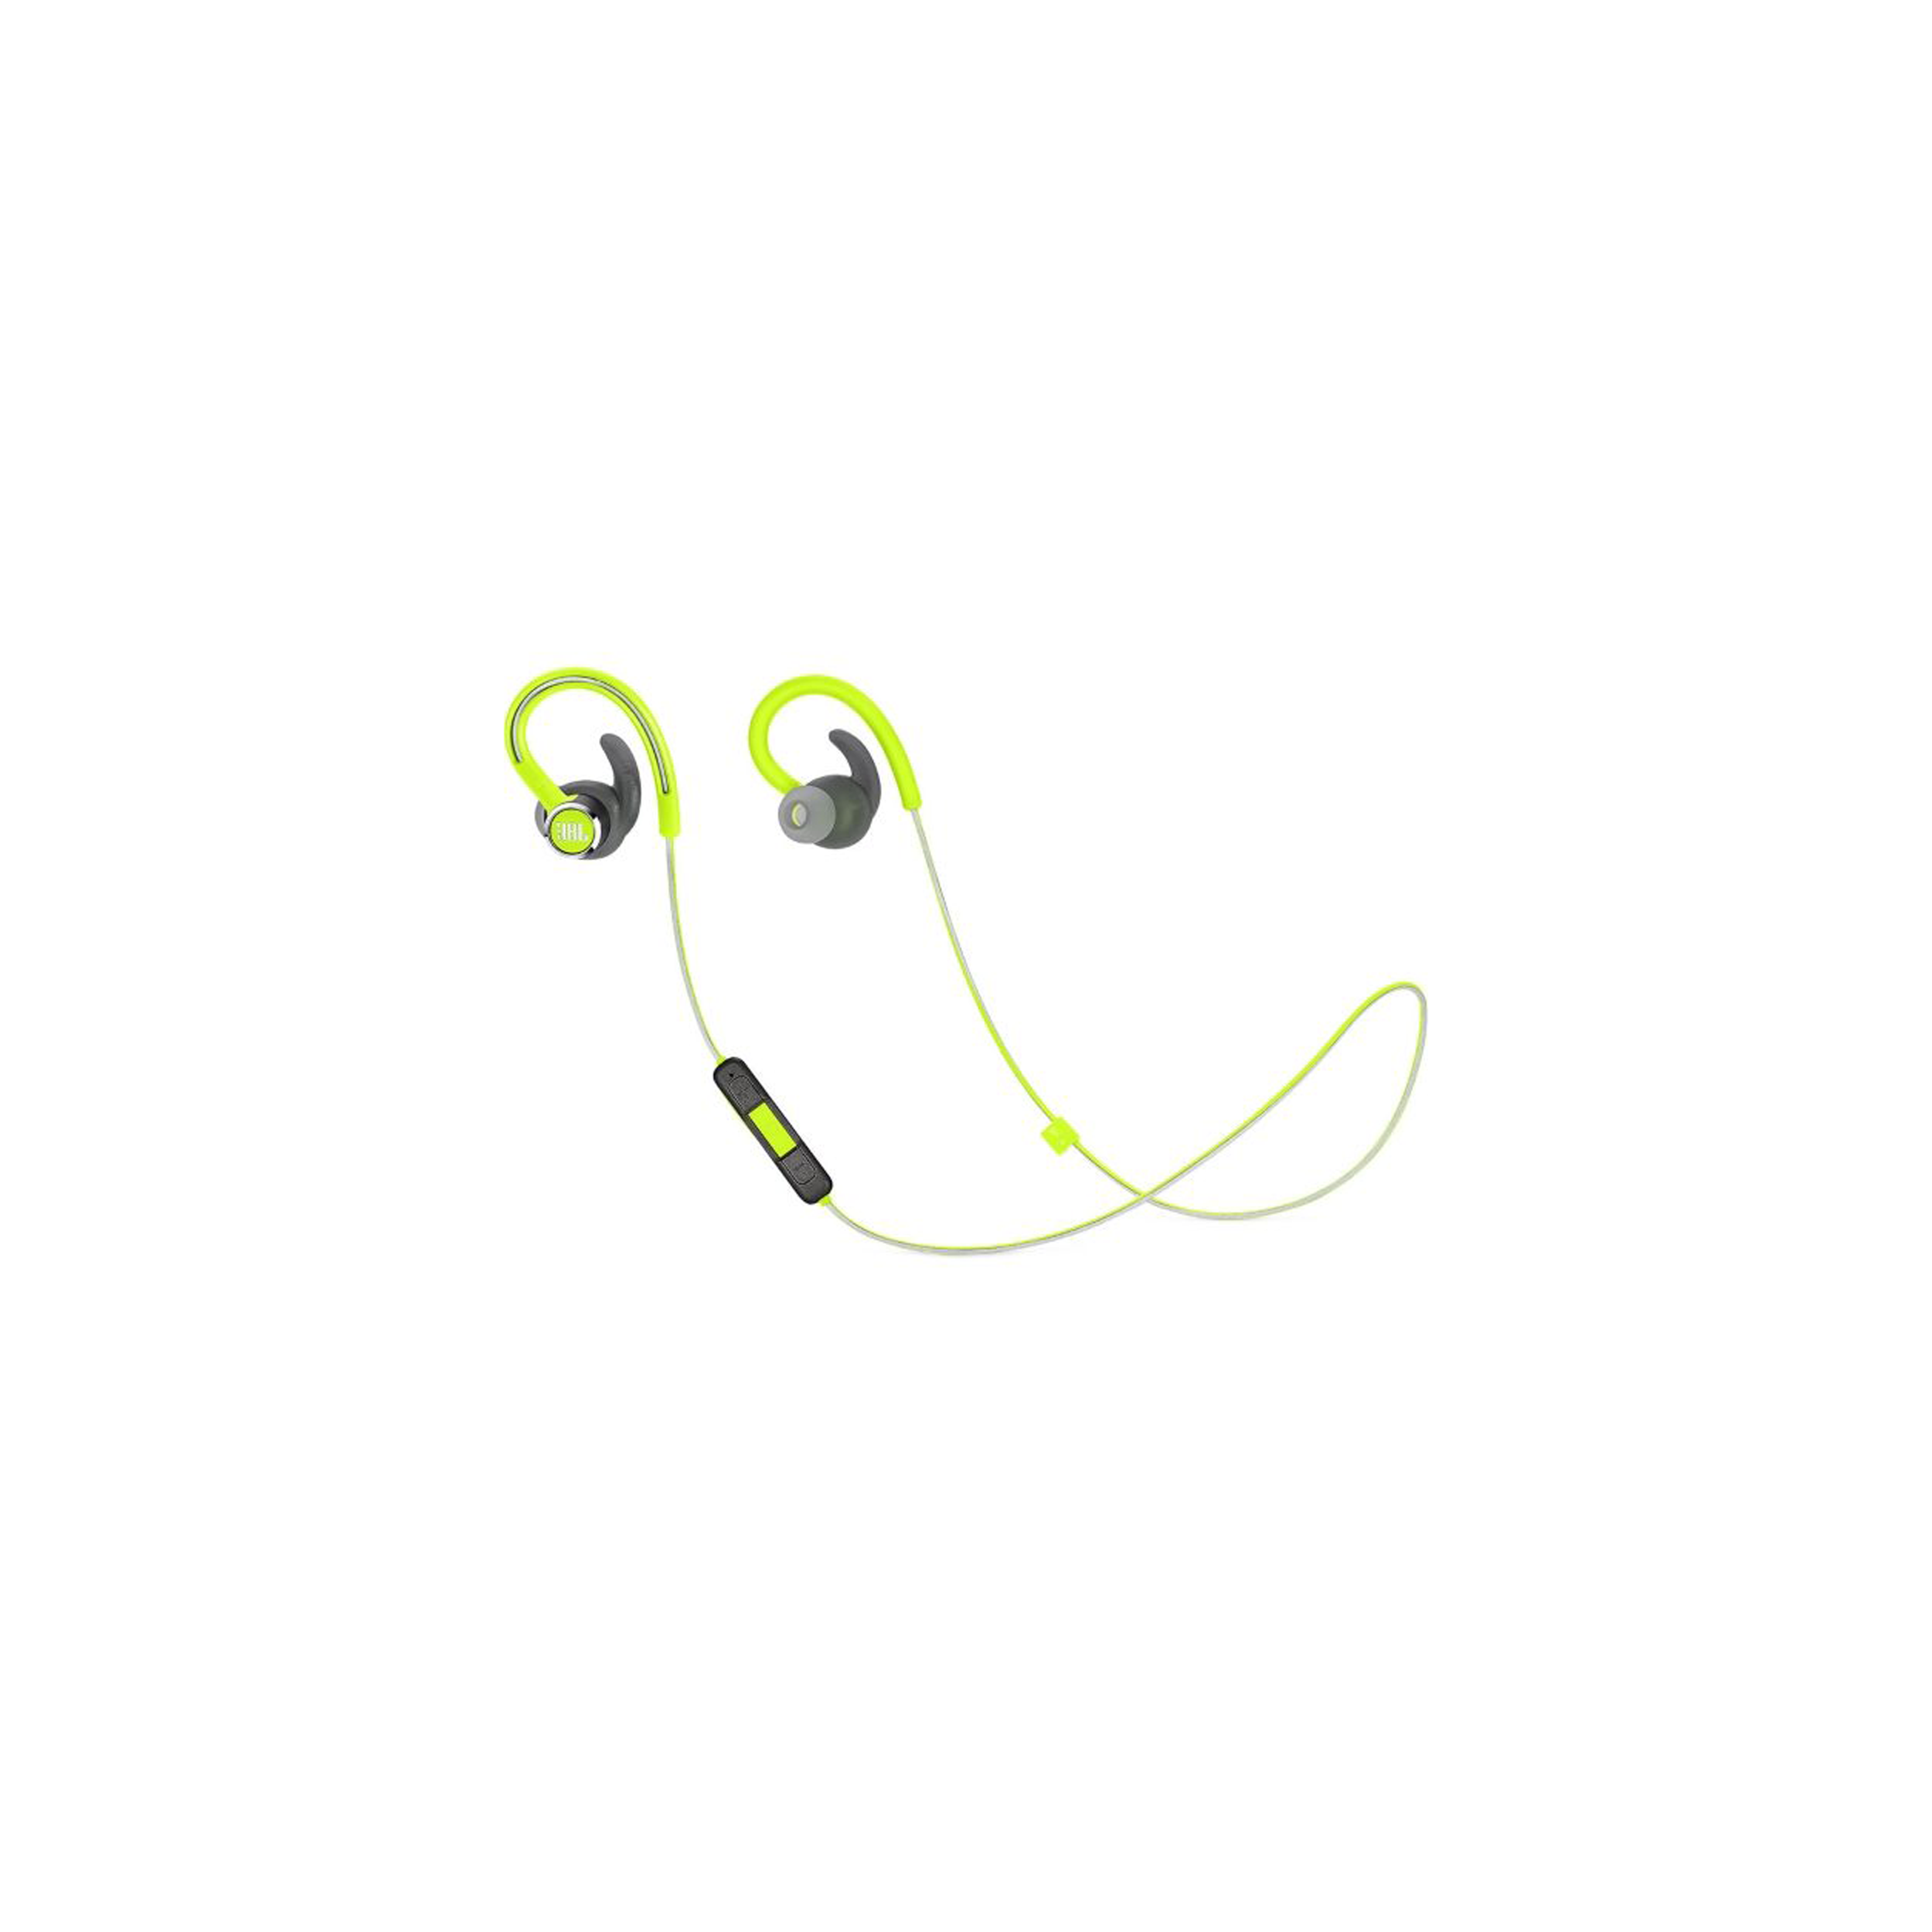 Jbl reflect contour 2 bluetooth wireless in ear headphones – green